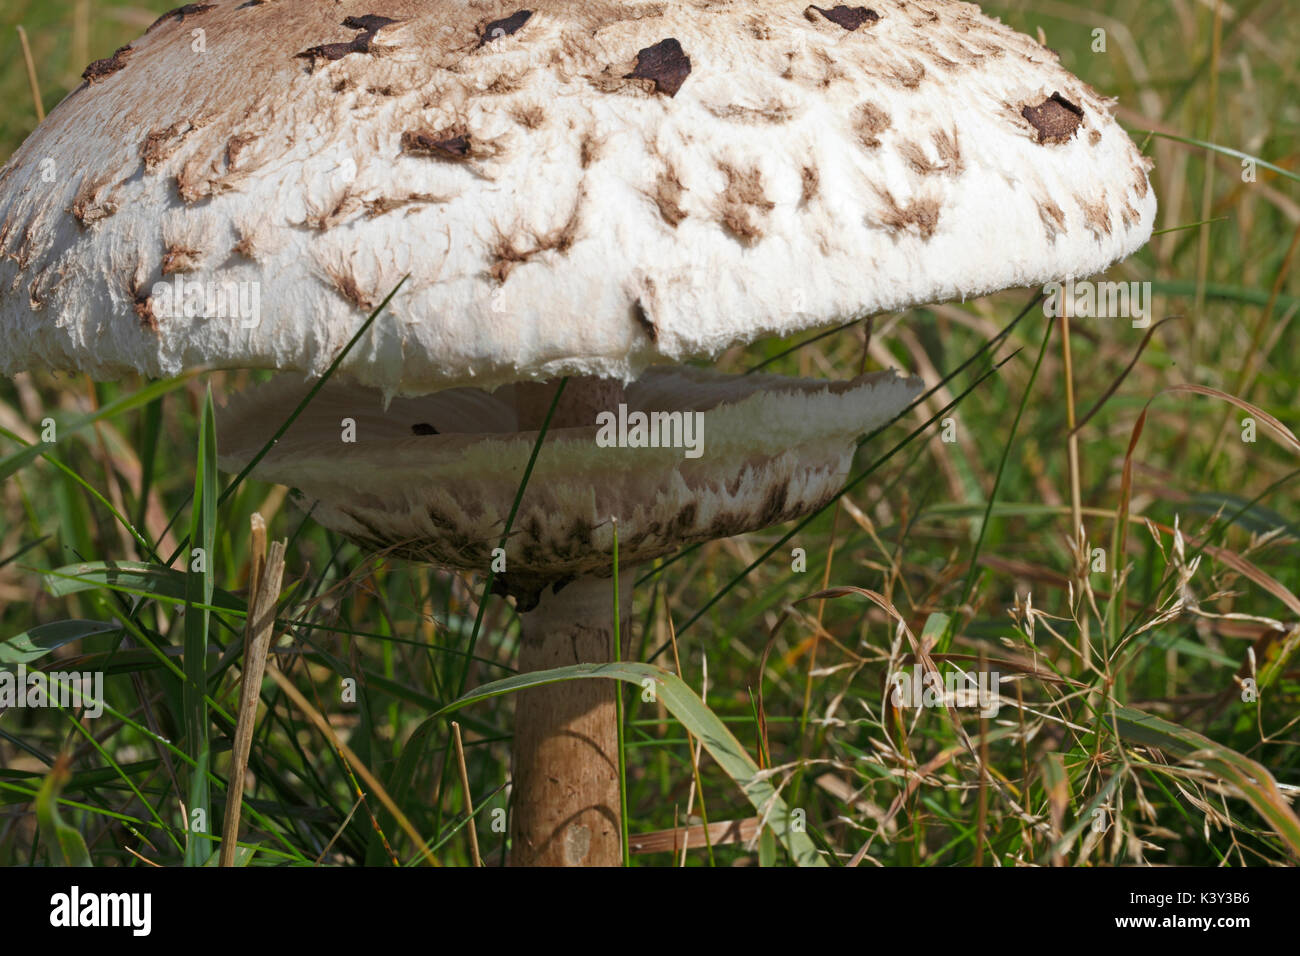 Shaggy parasol mushroom with white gills, macrolepiota rhacodes Stock Photo